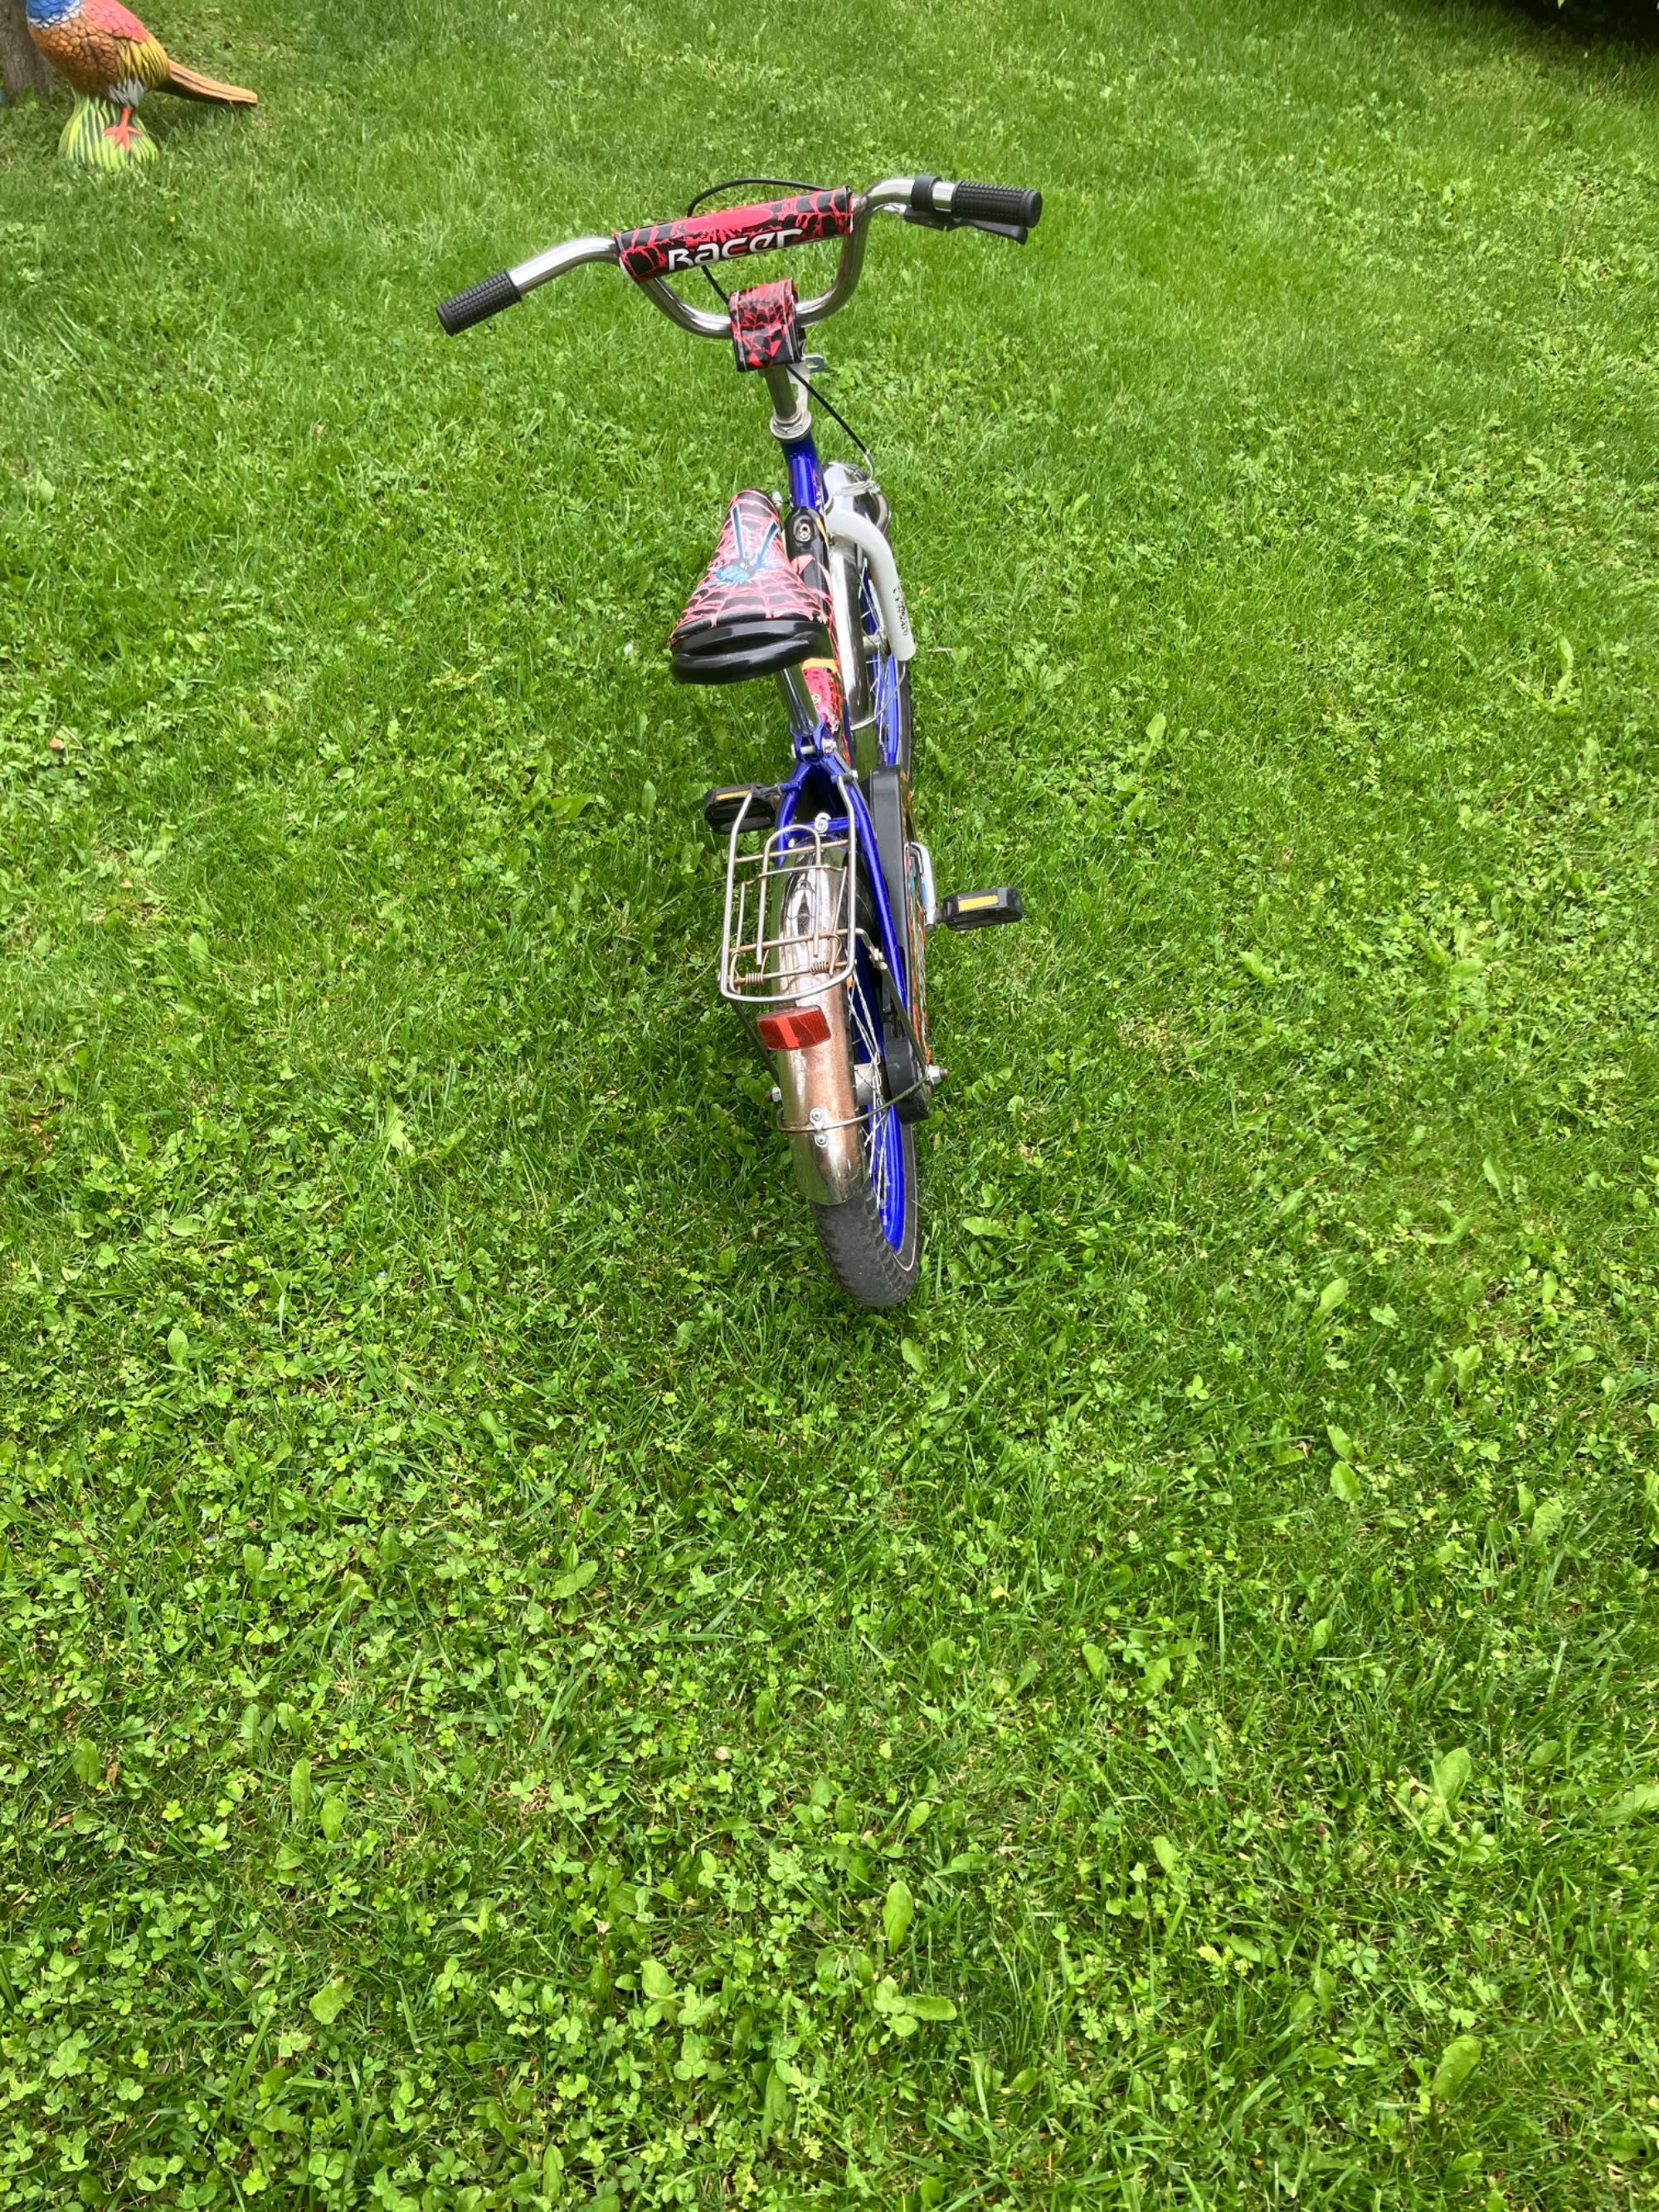 АТВ и децко колело